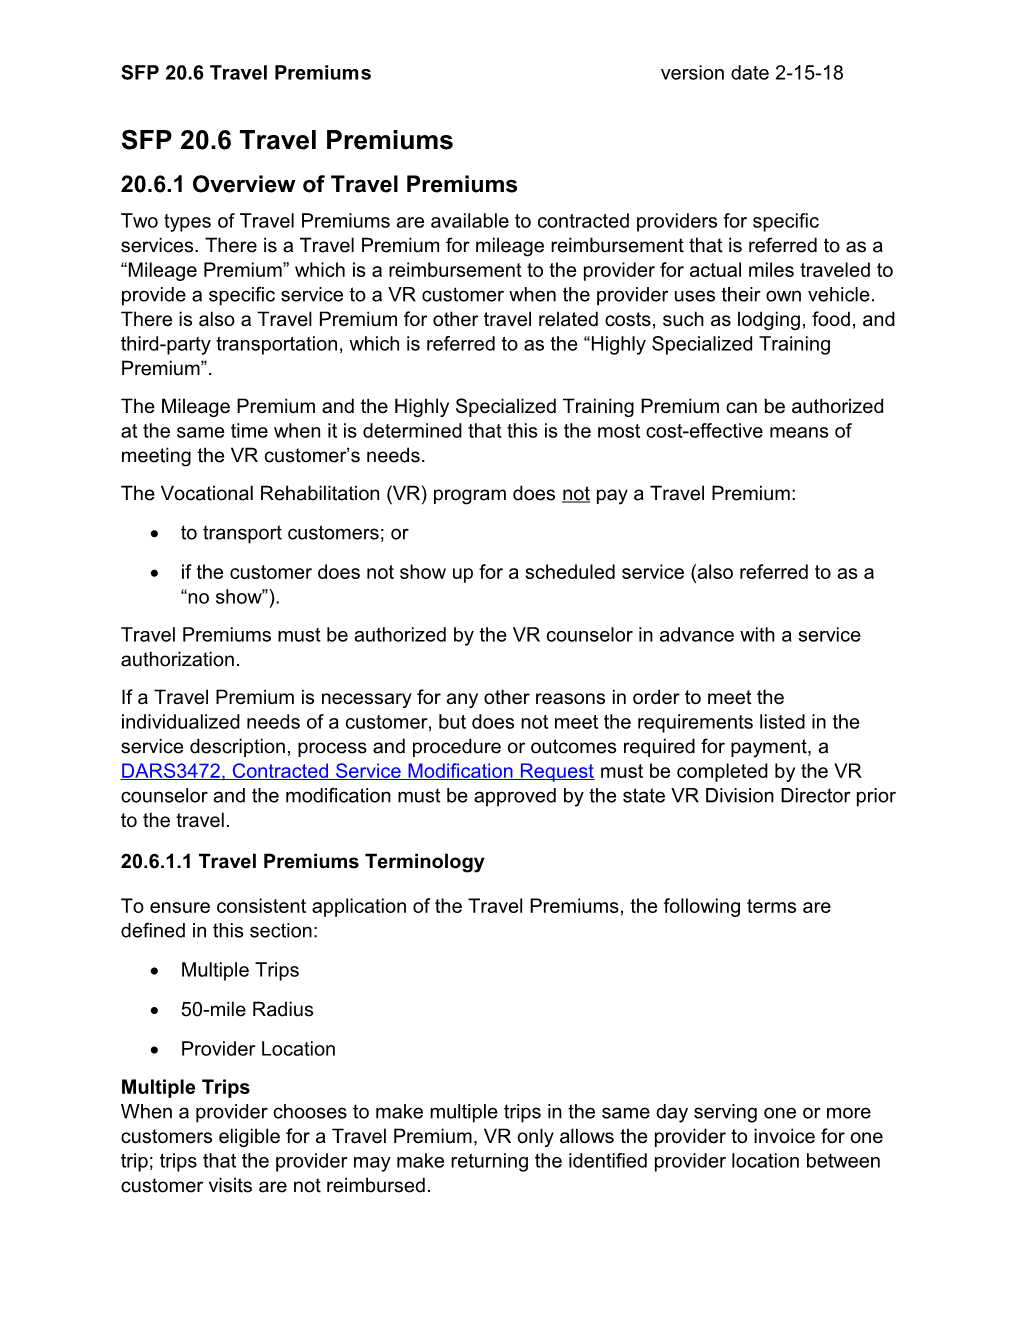 SFP 20.6 Travel Premiums Version Date 2-15-18